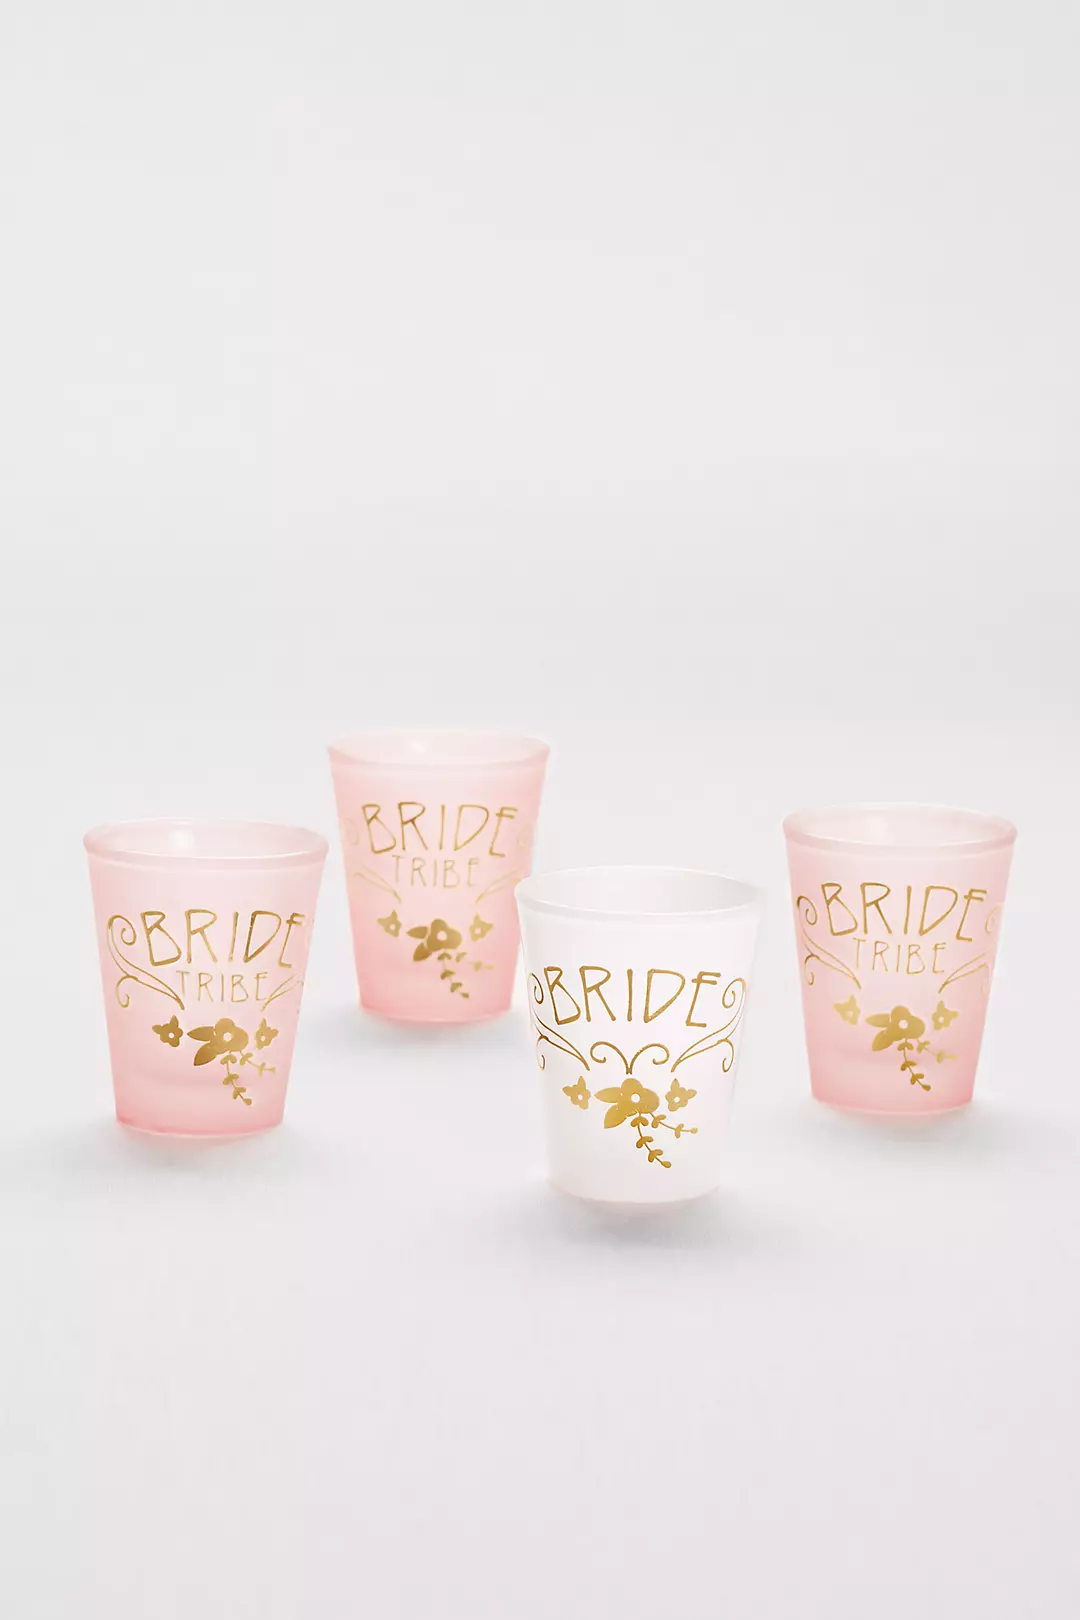 Bride and Bride Tribe Shot Glass Set Image